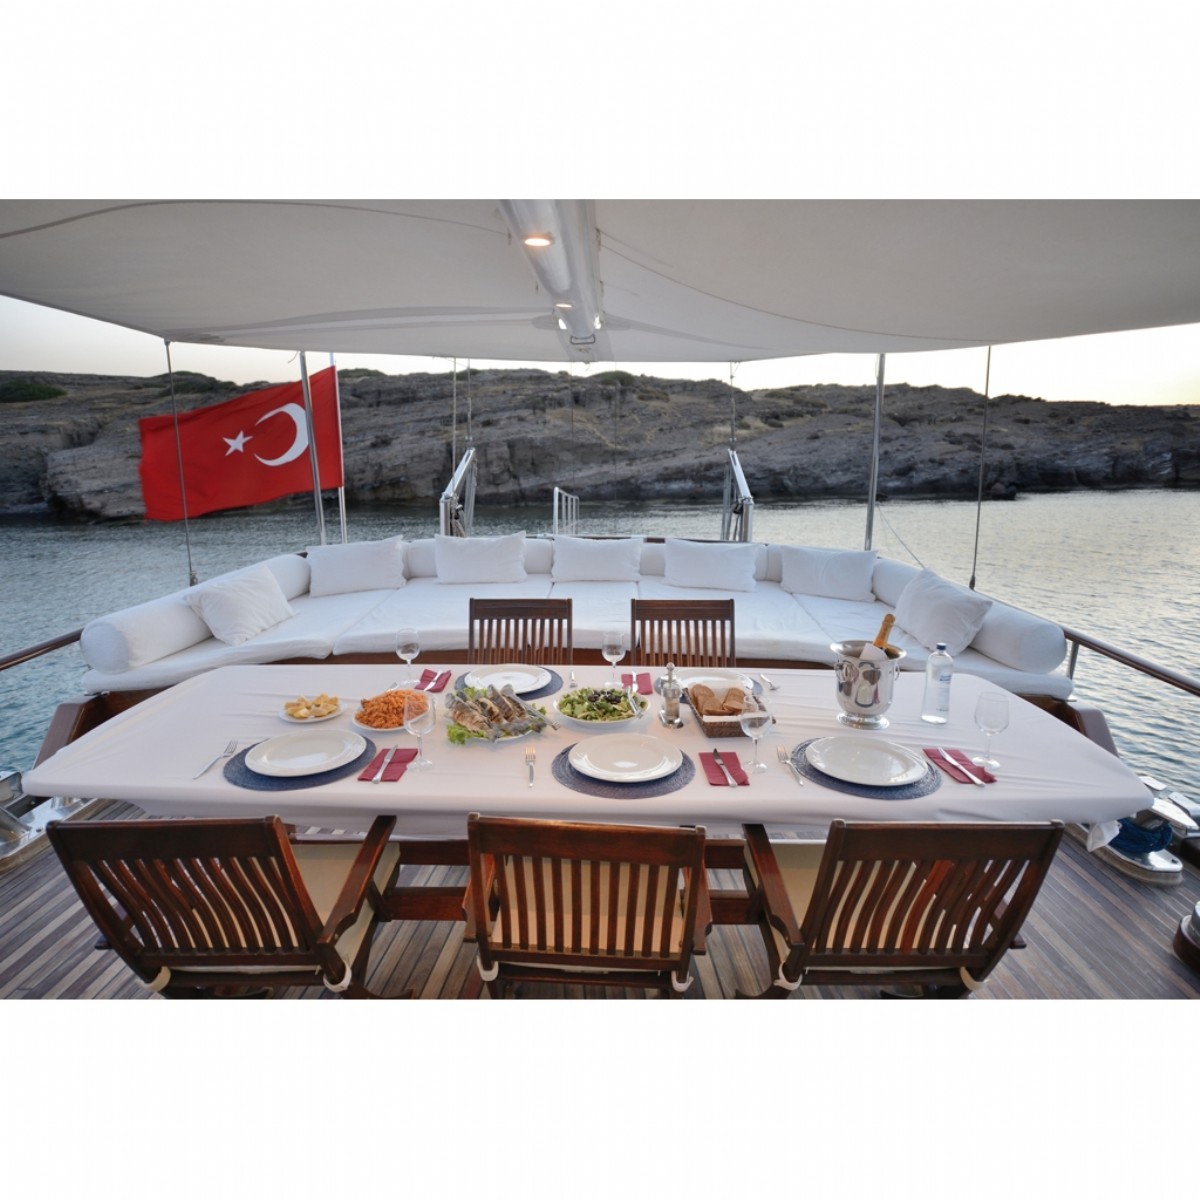 Luxury Gulets | Gulet Charter L599 Luxury Gulet Yacht For 10 People | L599 | yacht rental turkey, luxury gulet charter turkey, gulet boat charter, luxury yacht rentals, Yacht charter Turkey, Gulet charter, YachtingTurkey, gulet Turkey, yacht rentals Turkey, boat charter Turkey, Bodrum yacht charter, luxury gulet, Arielle yacht | 